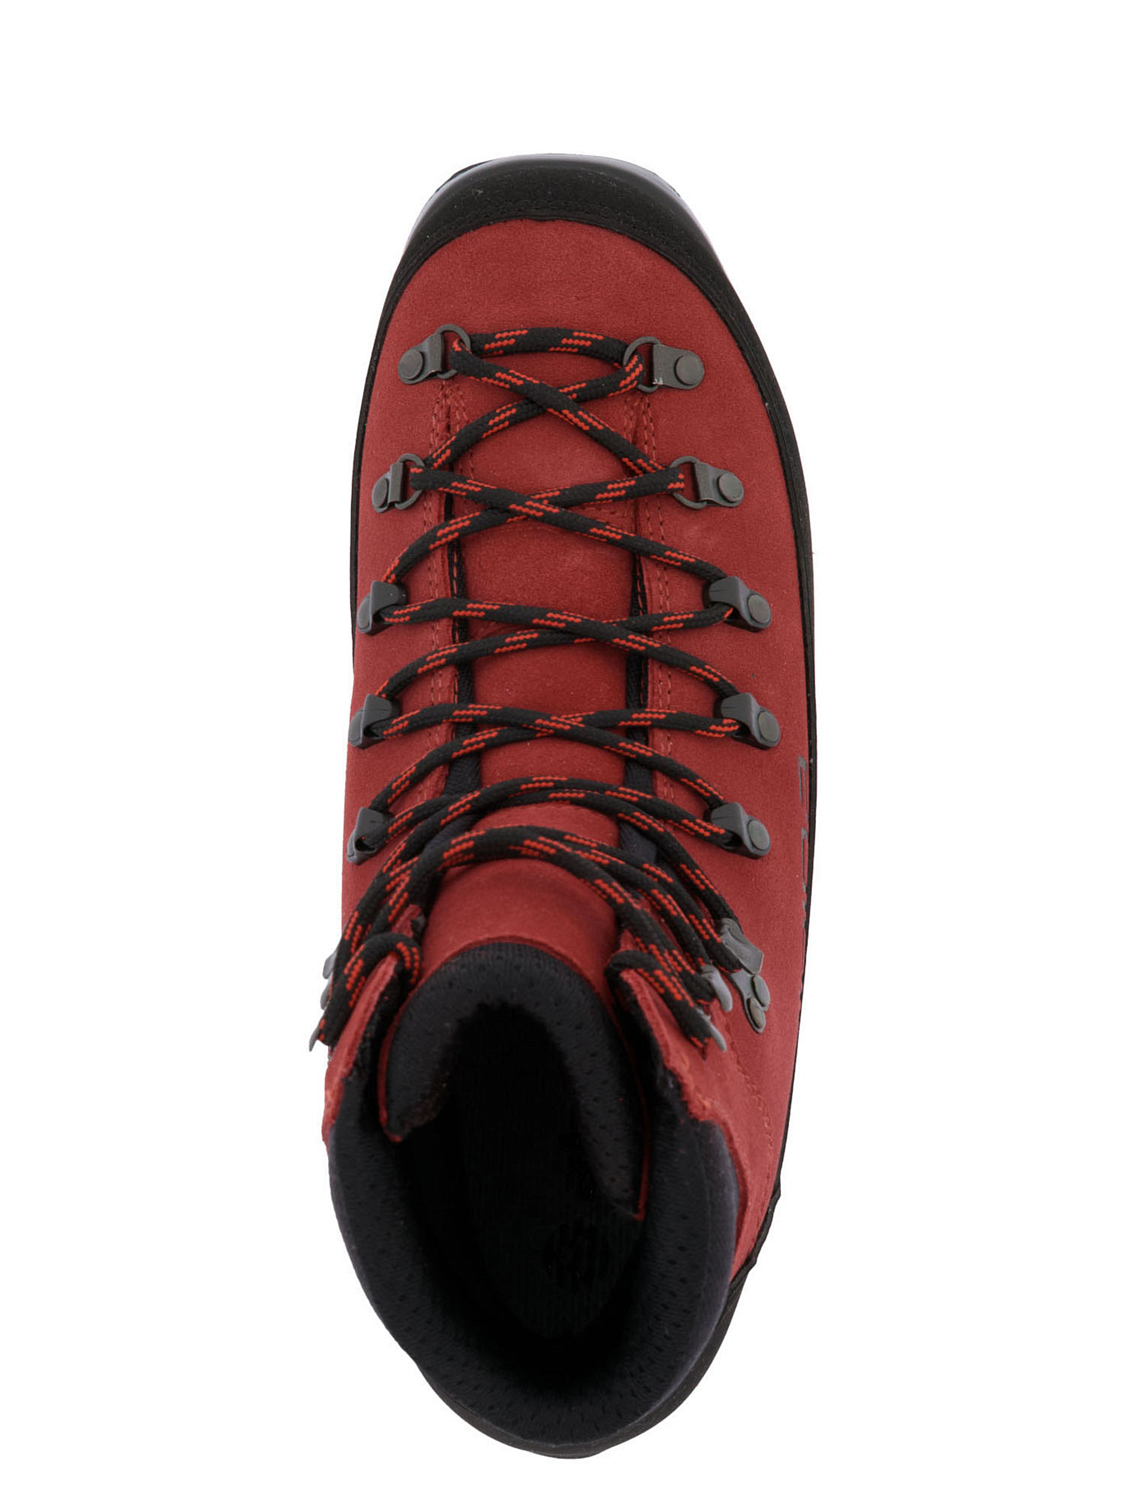 Лыжные ботинки Alpina. Wyoming Red/Black